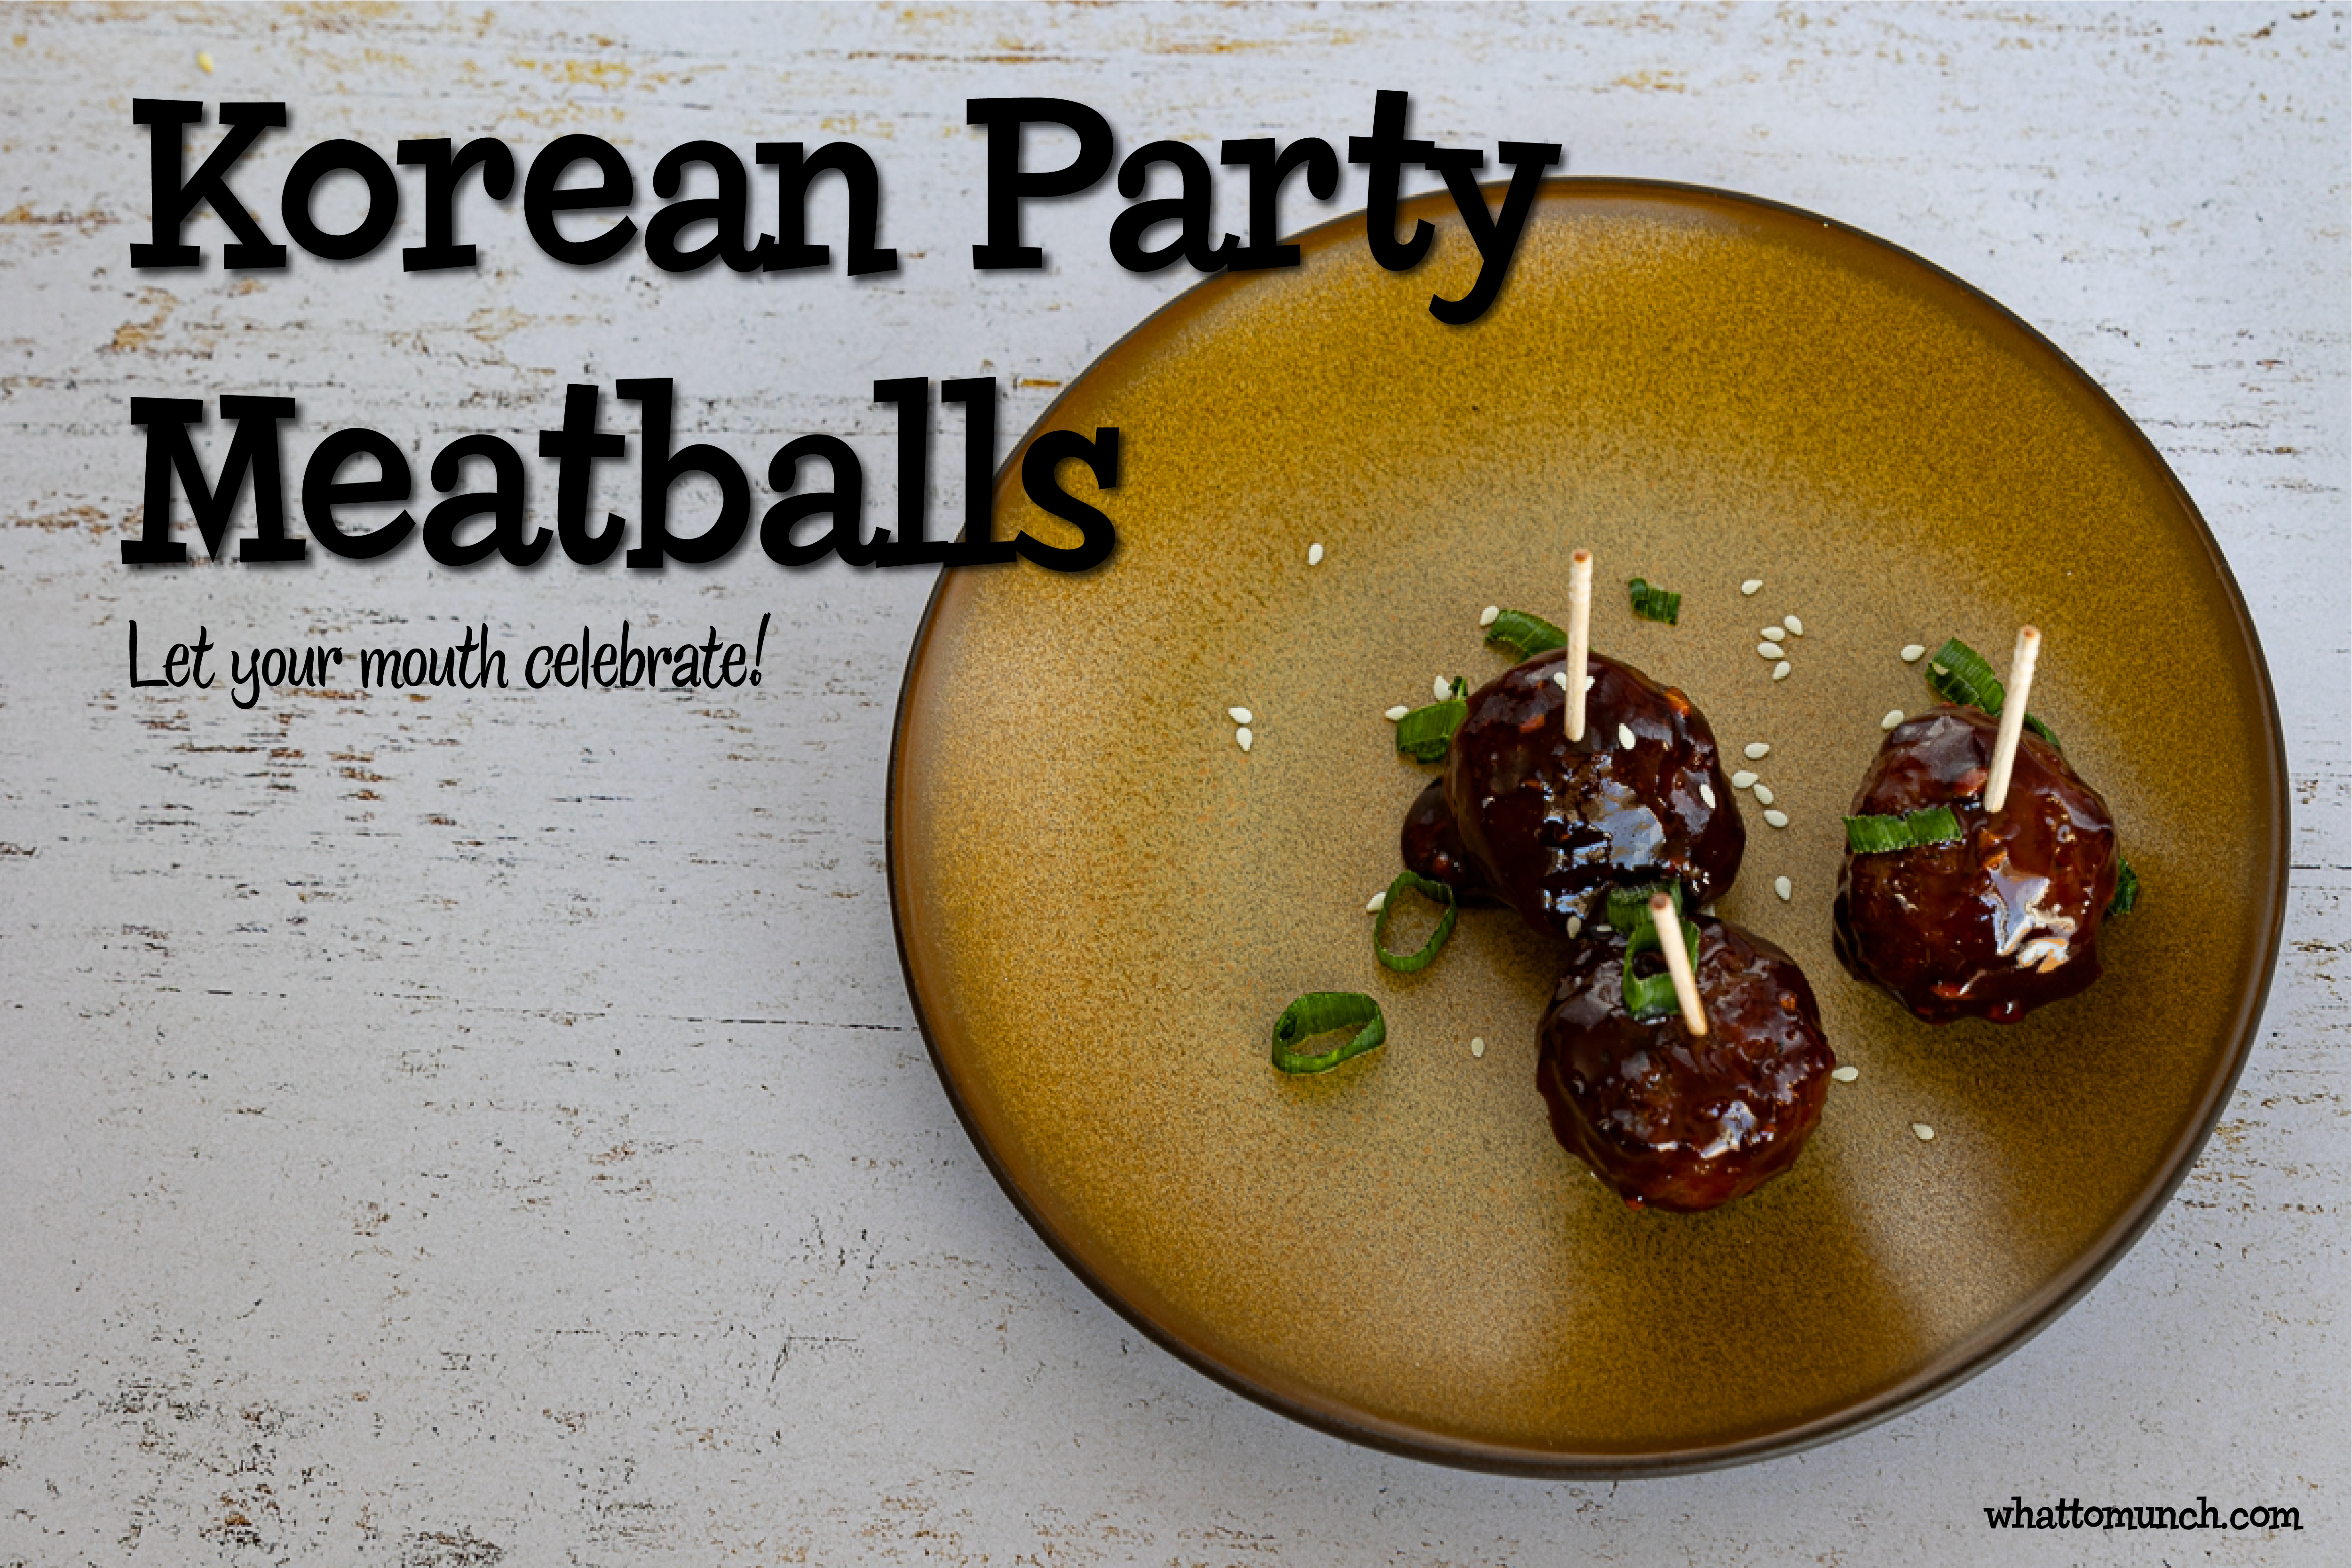 Korean Party Meatballs